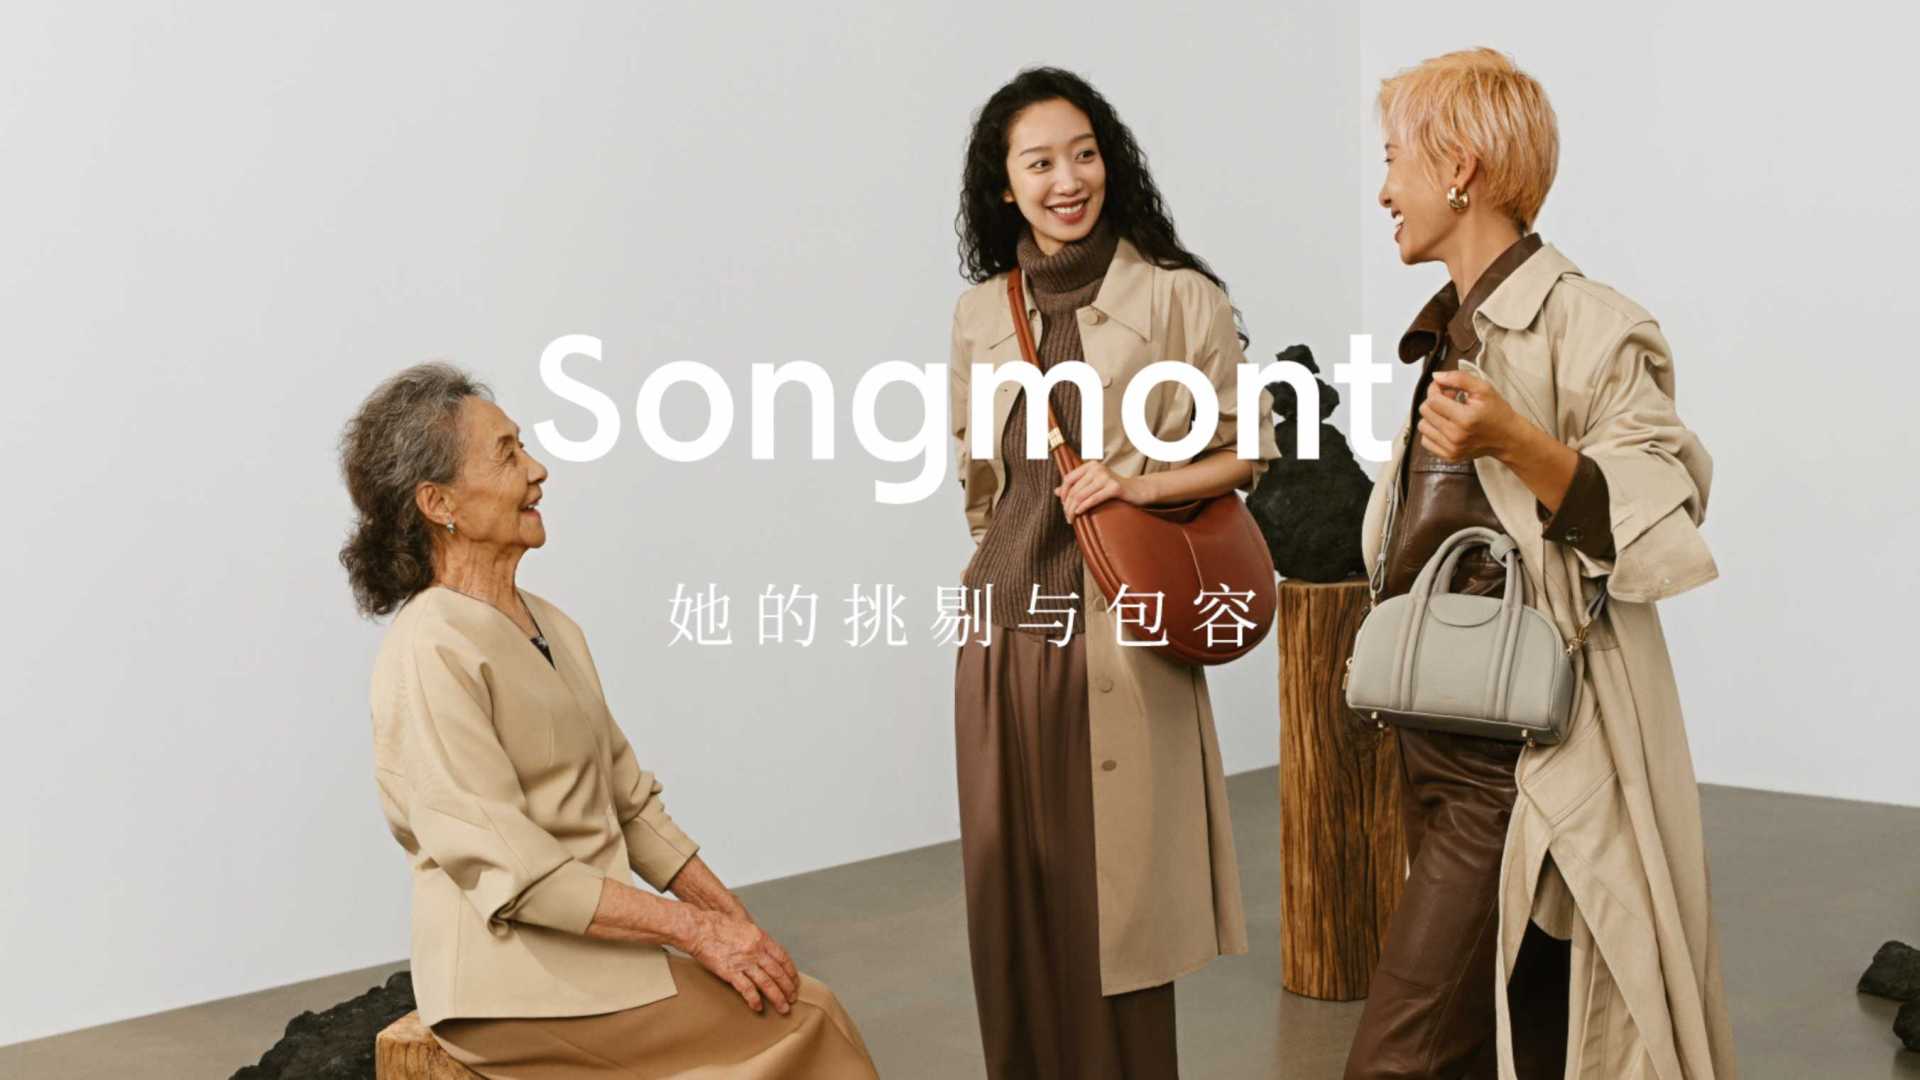 Songmont 品牌大片 - 她的挑剔与包容